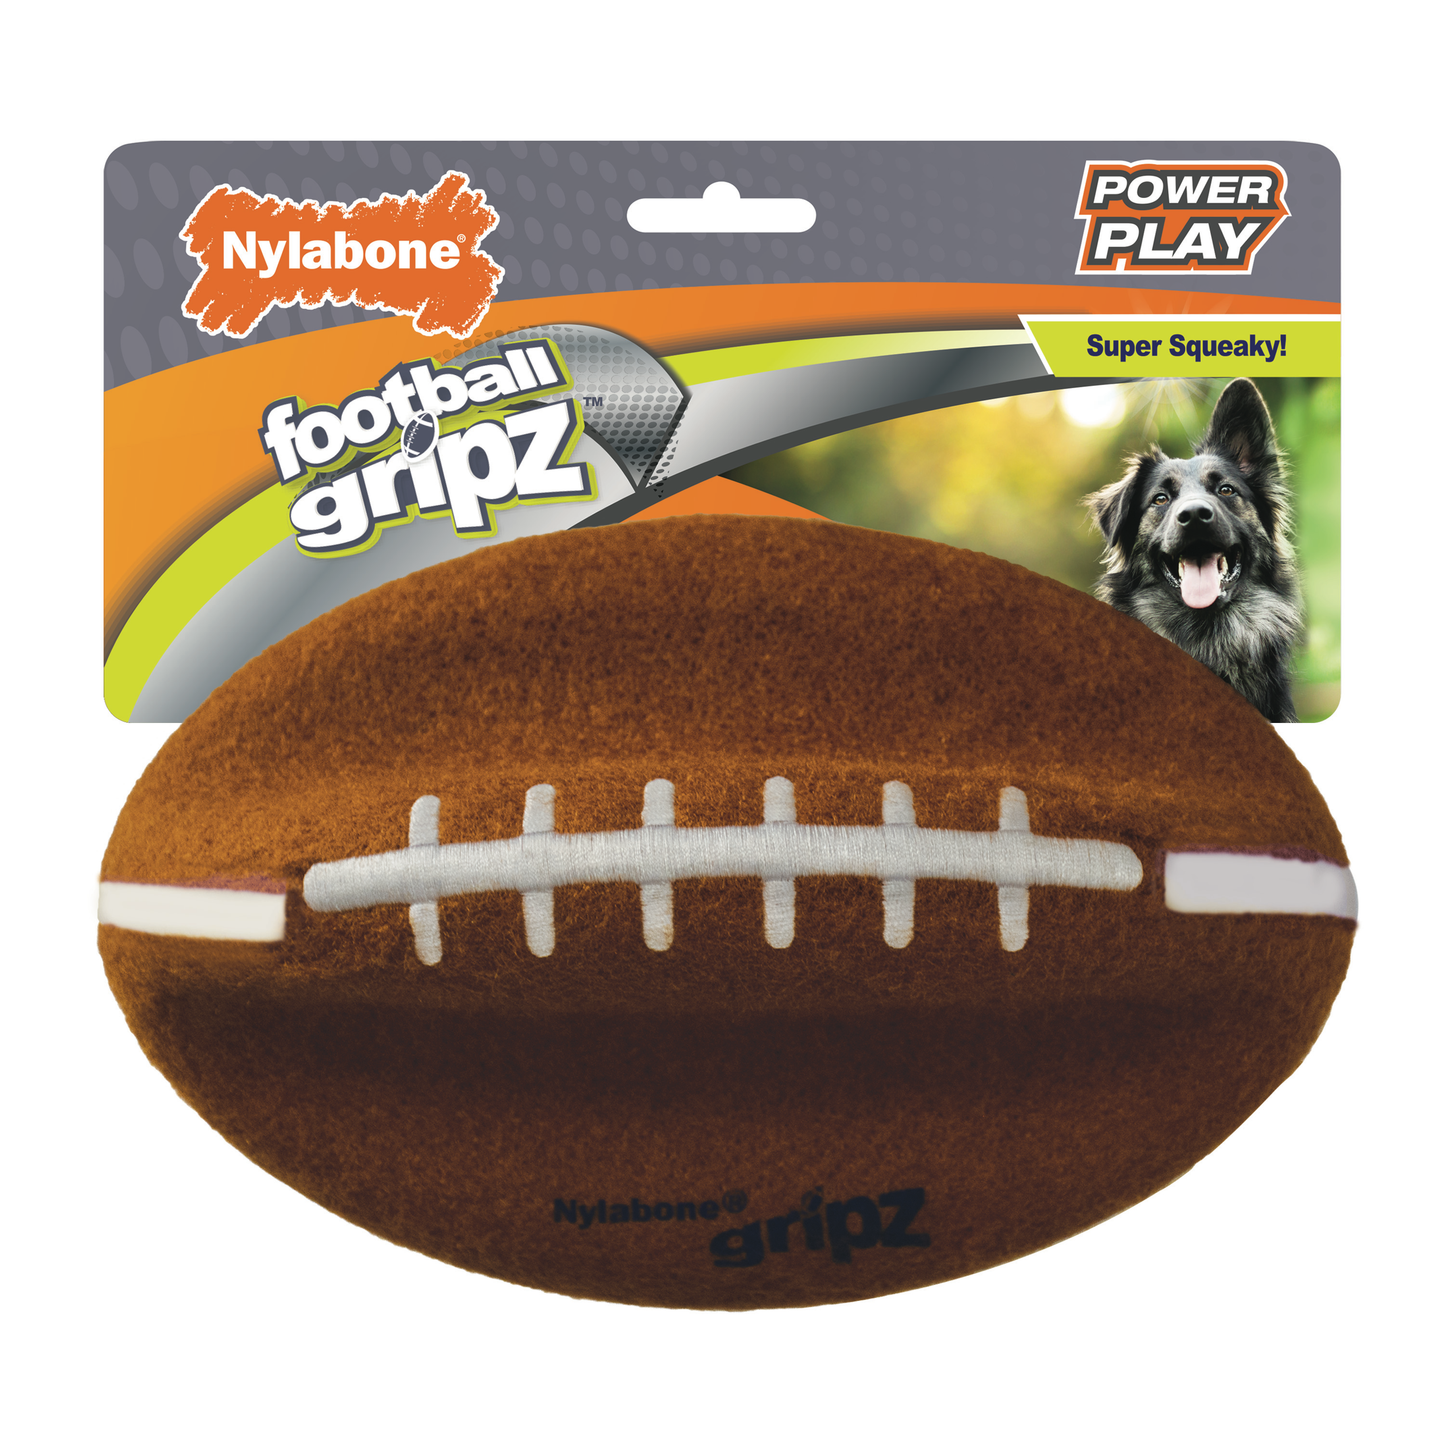 Nylabone Power Play Dog Football Gripz Large/Giant